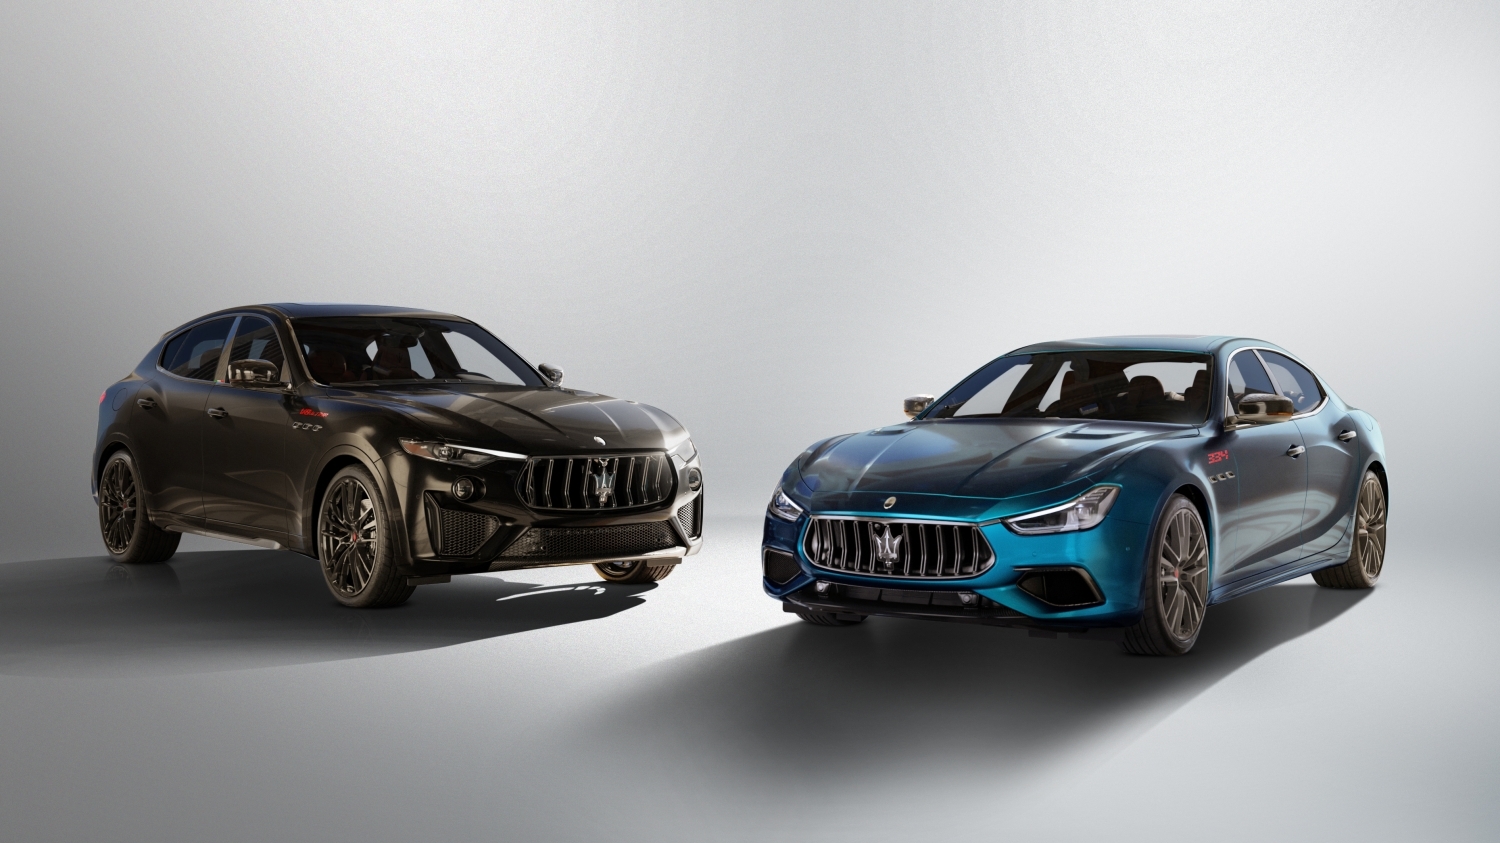 02_致敬 V8 引擎最終章 Maserati 全球首發高性能兩款車型 Ghibli 334 Ultima 和 Levante V8 Ultima.jpg